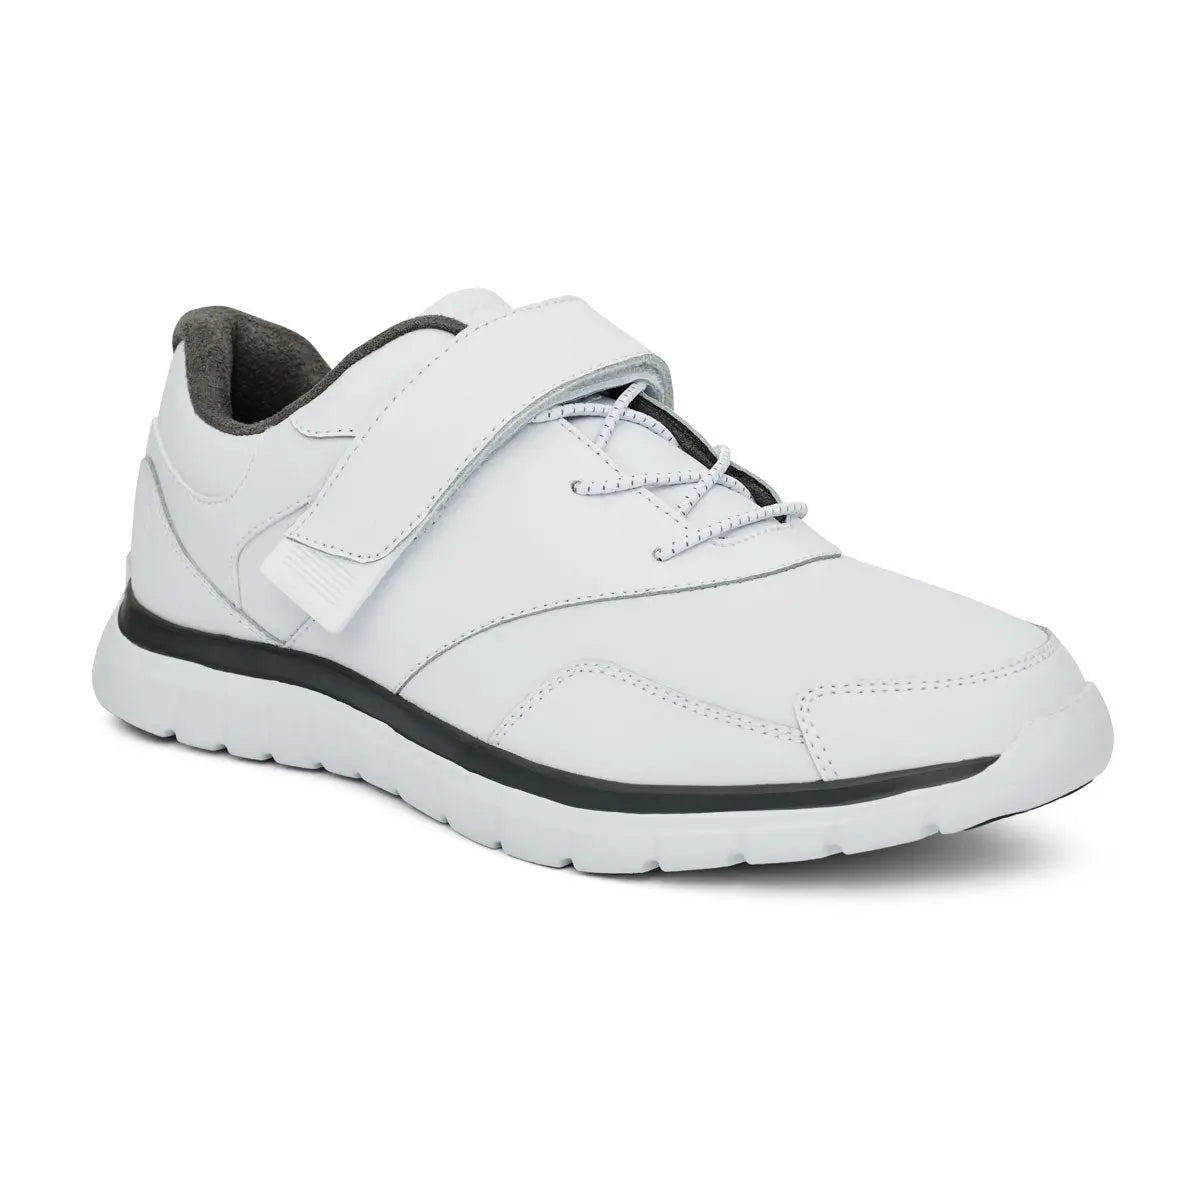 Anodyne Men's No.38 Sport Walker Diabetic Shoe, White - Main Image